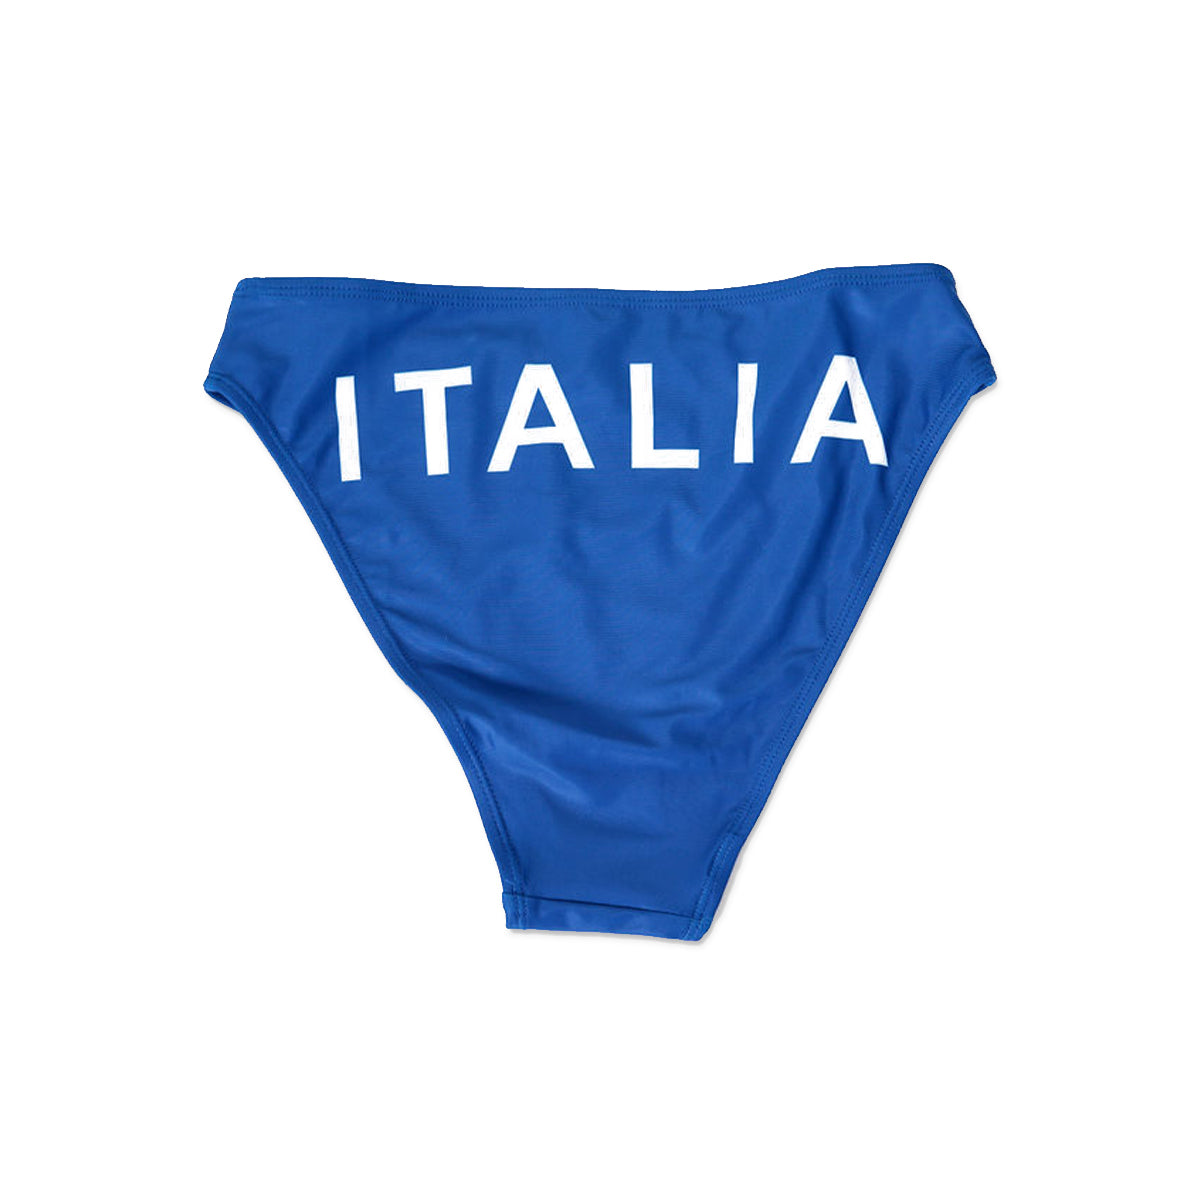 Italia Bikini Bottoms (Blue)